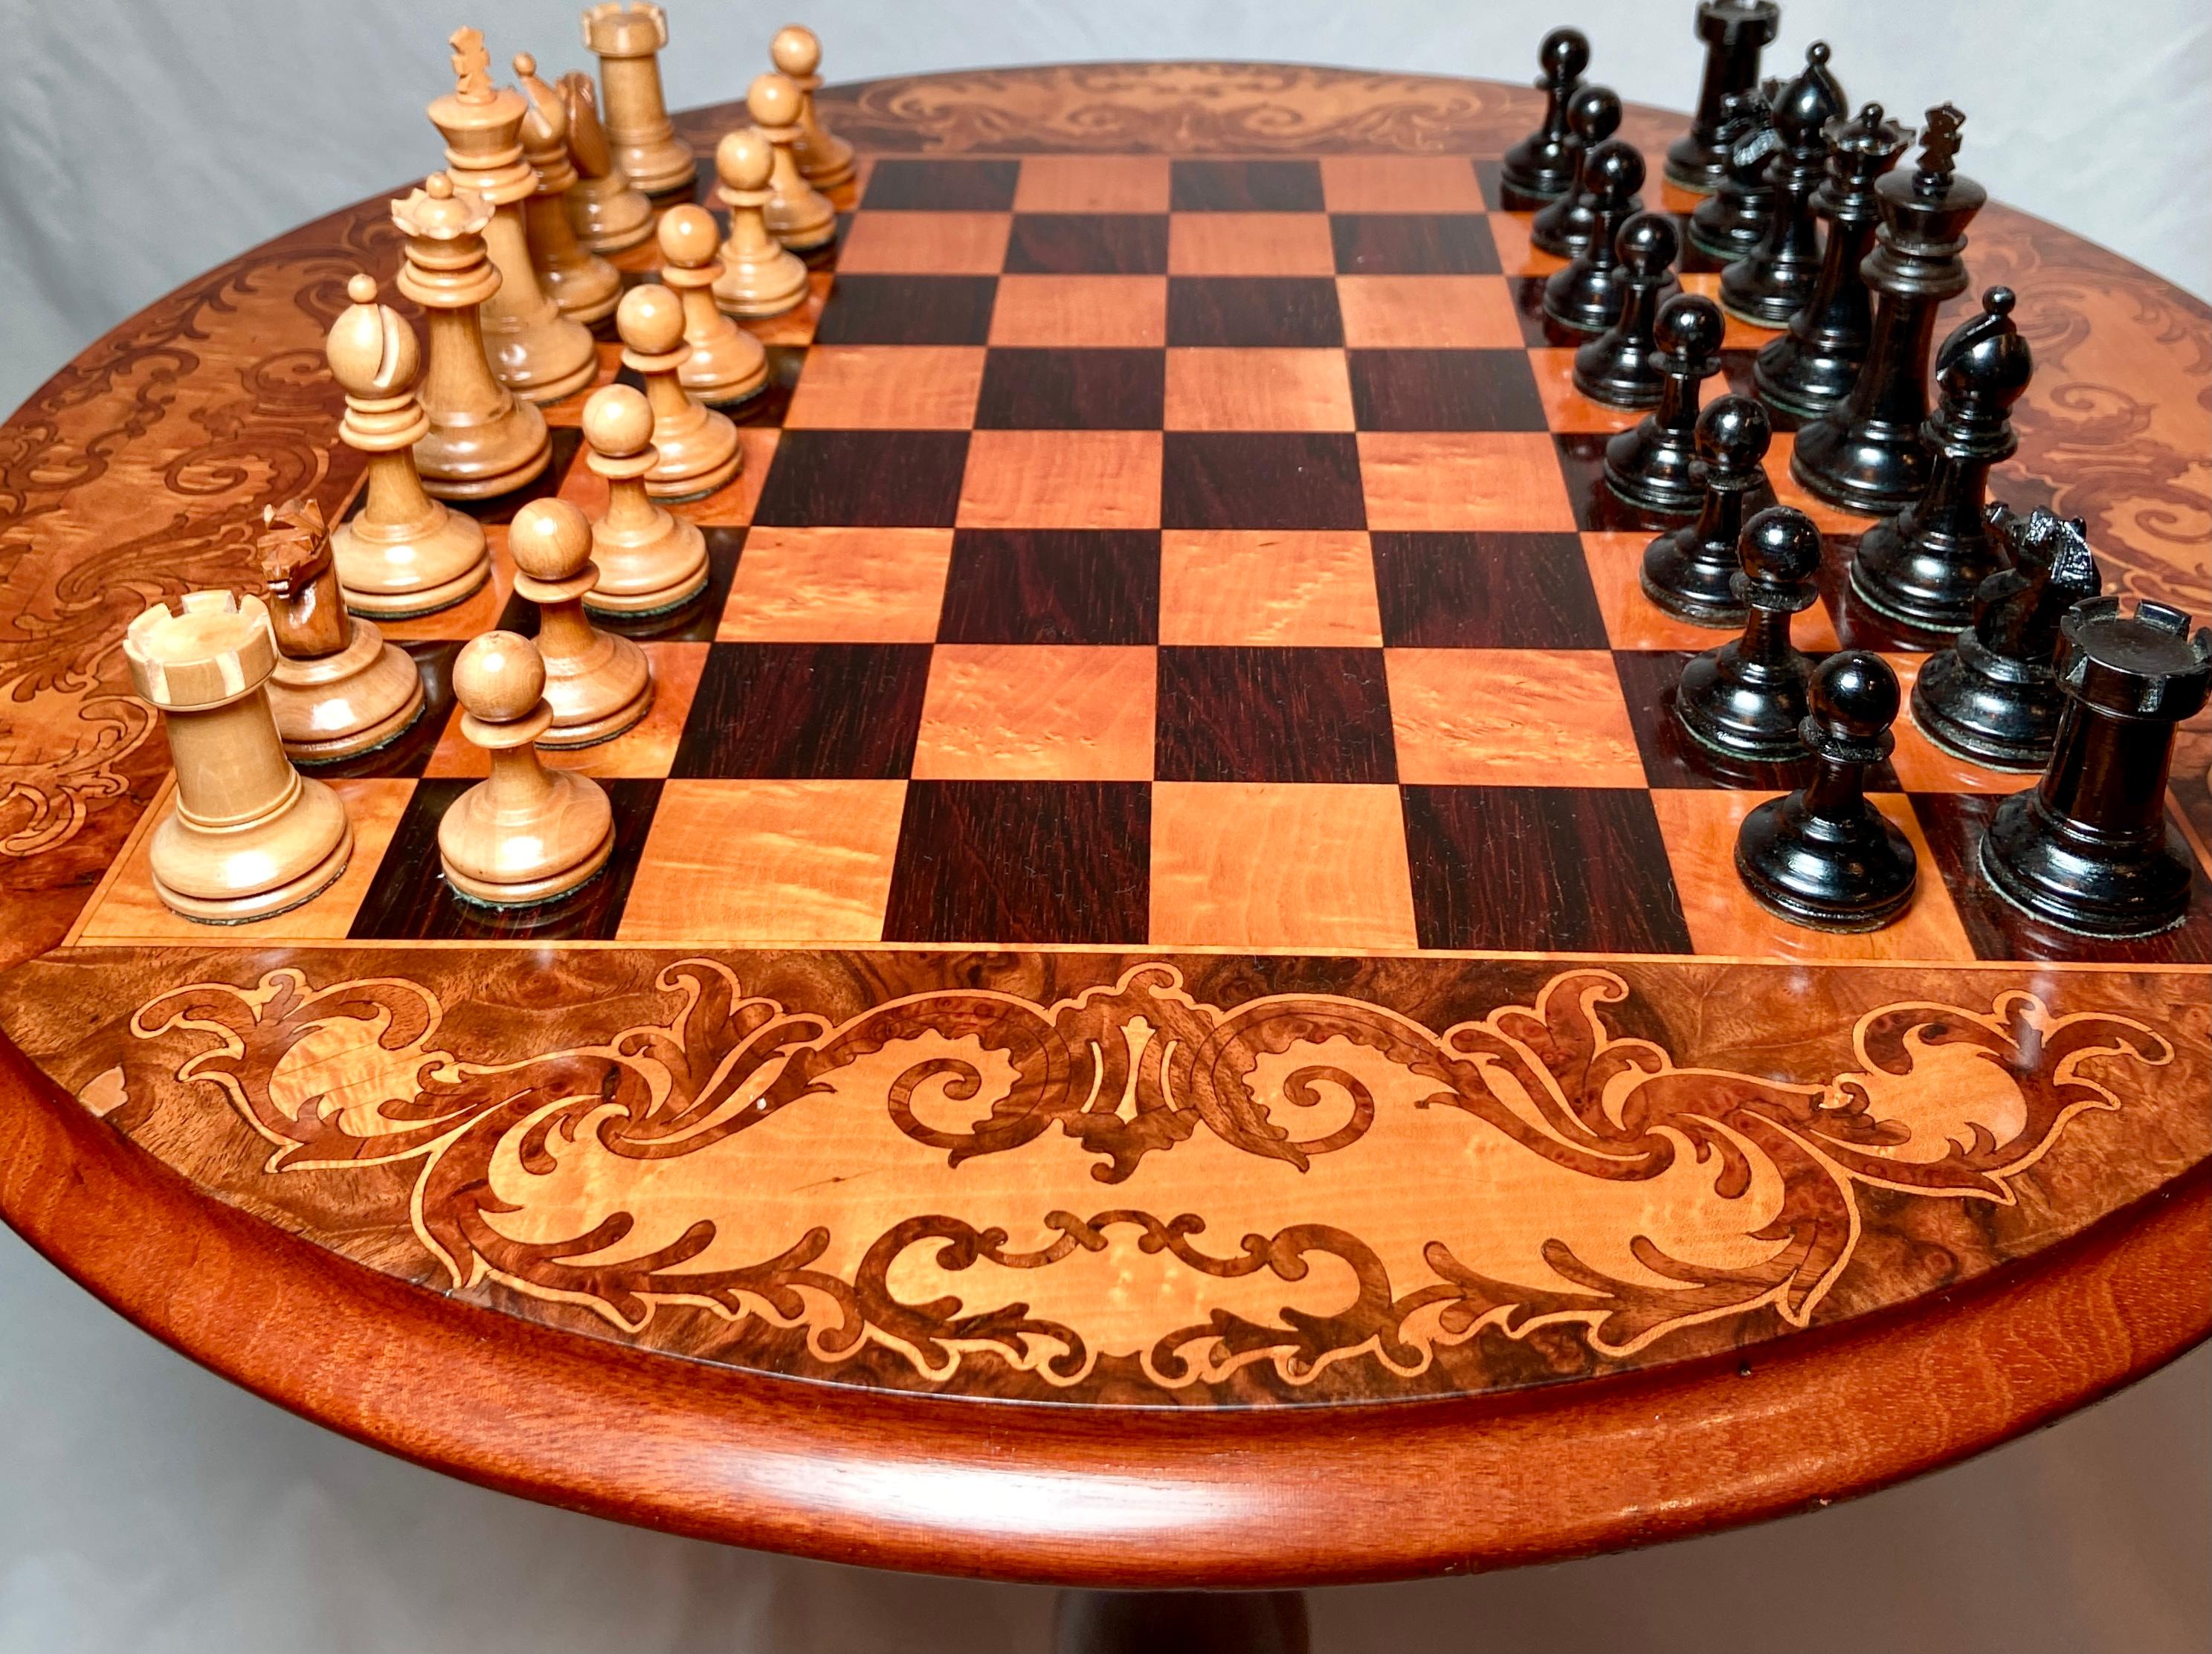 Antique 19th century English Victorian era walnut chess table, circa 1885.